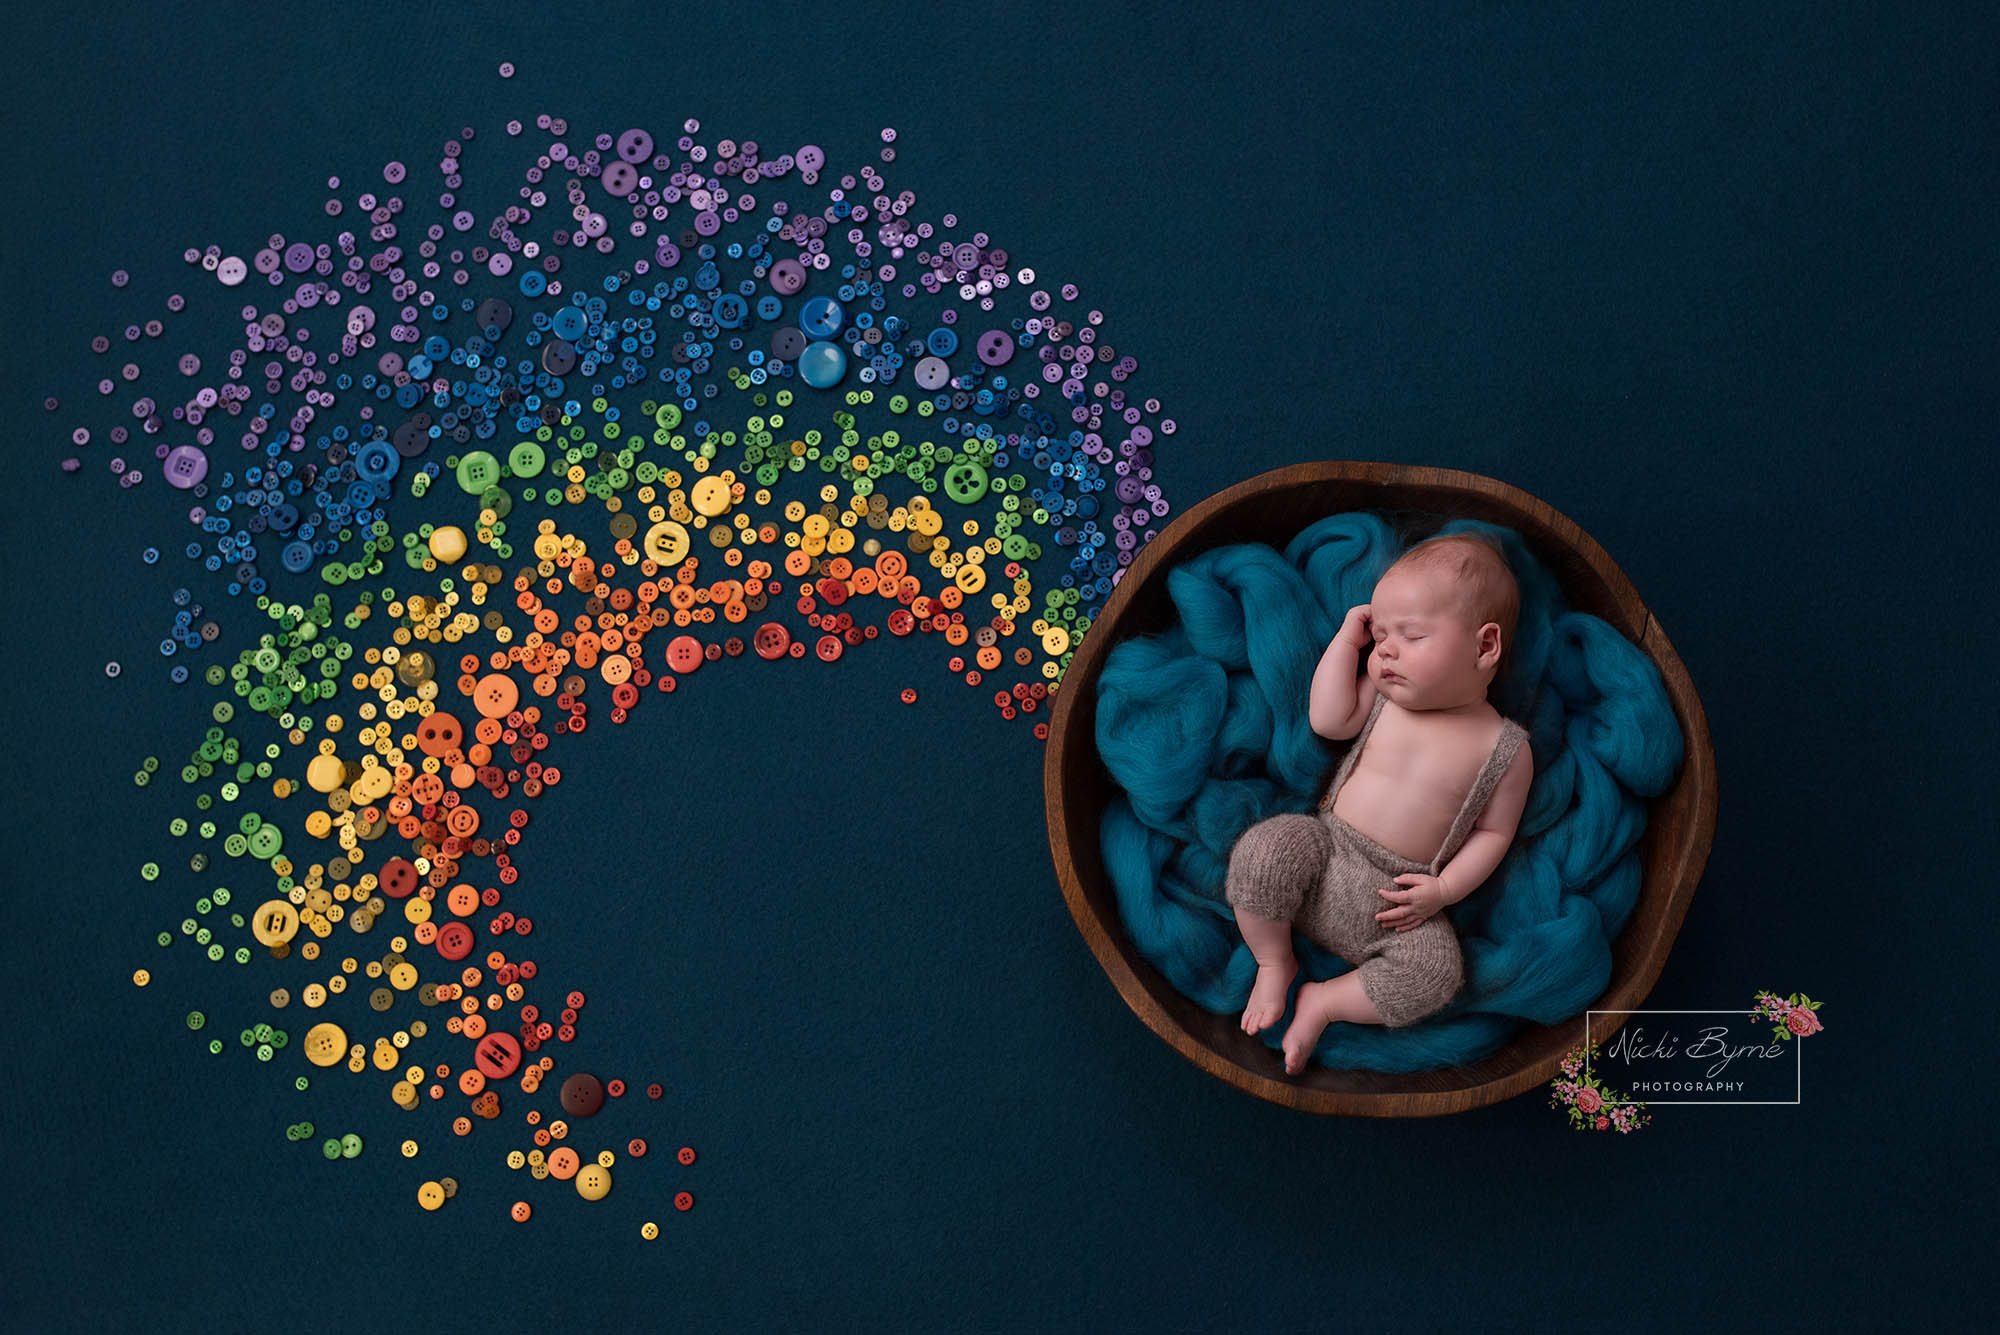 Rainbow Baby Newborn photographer sutton coldfield